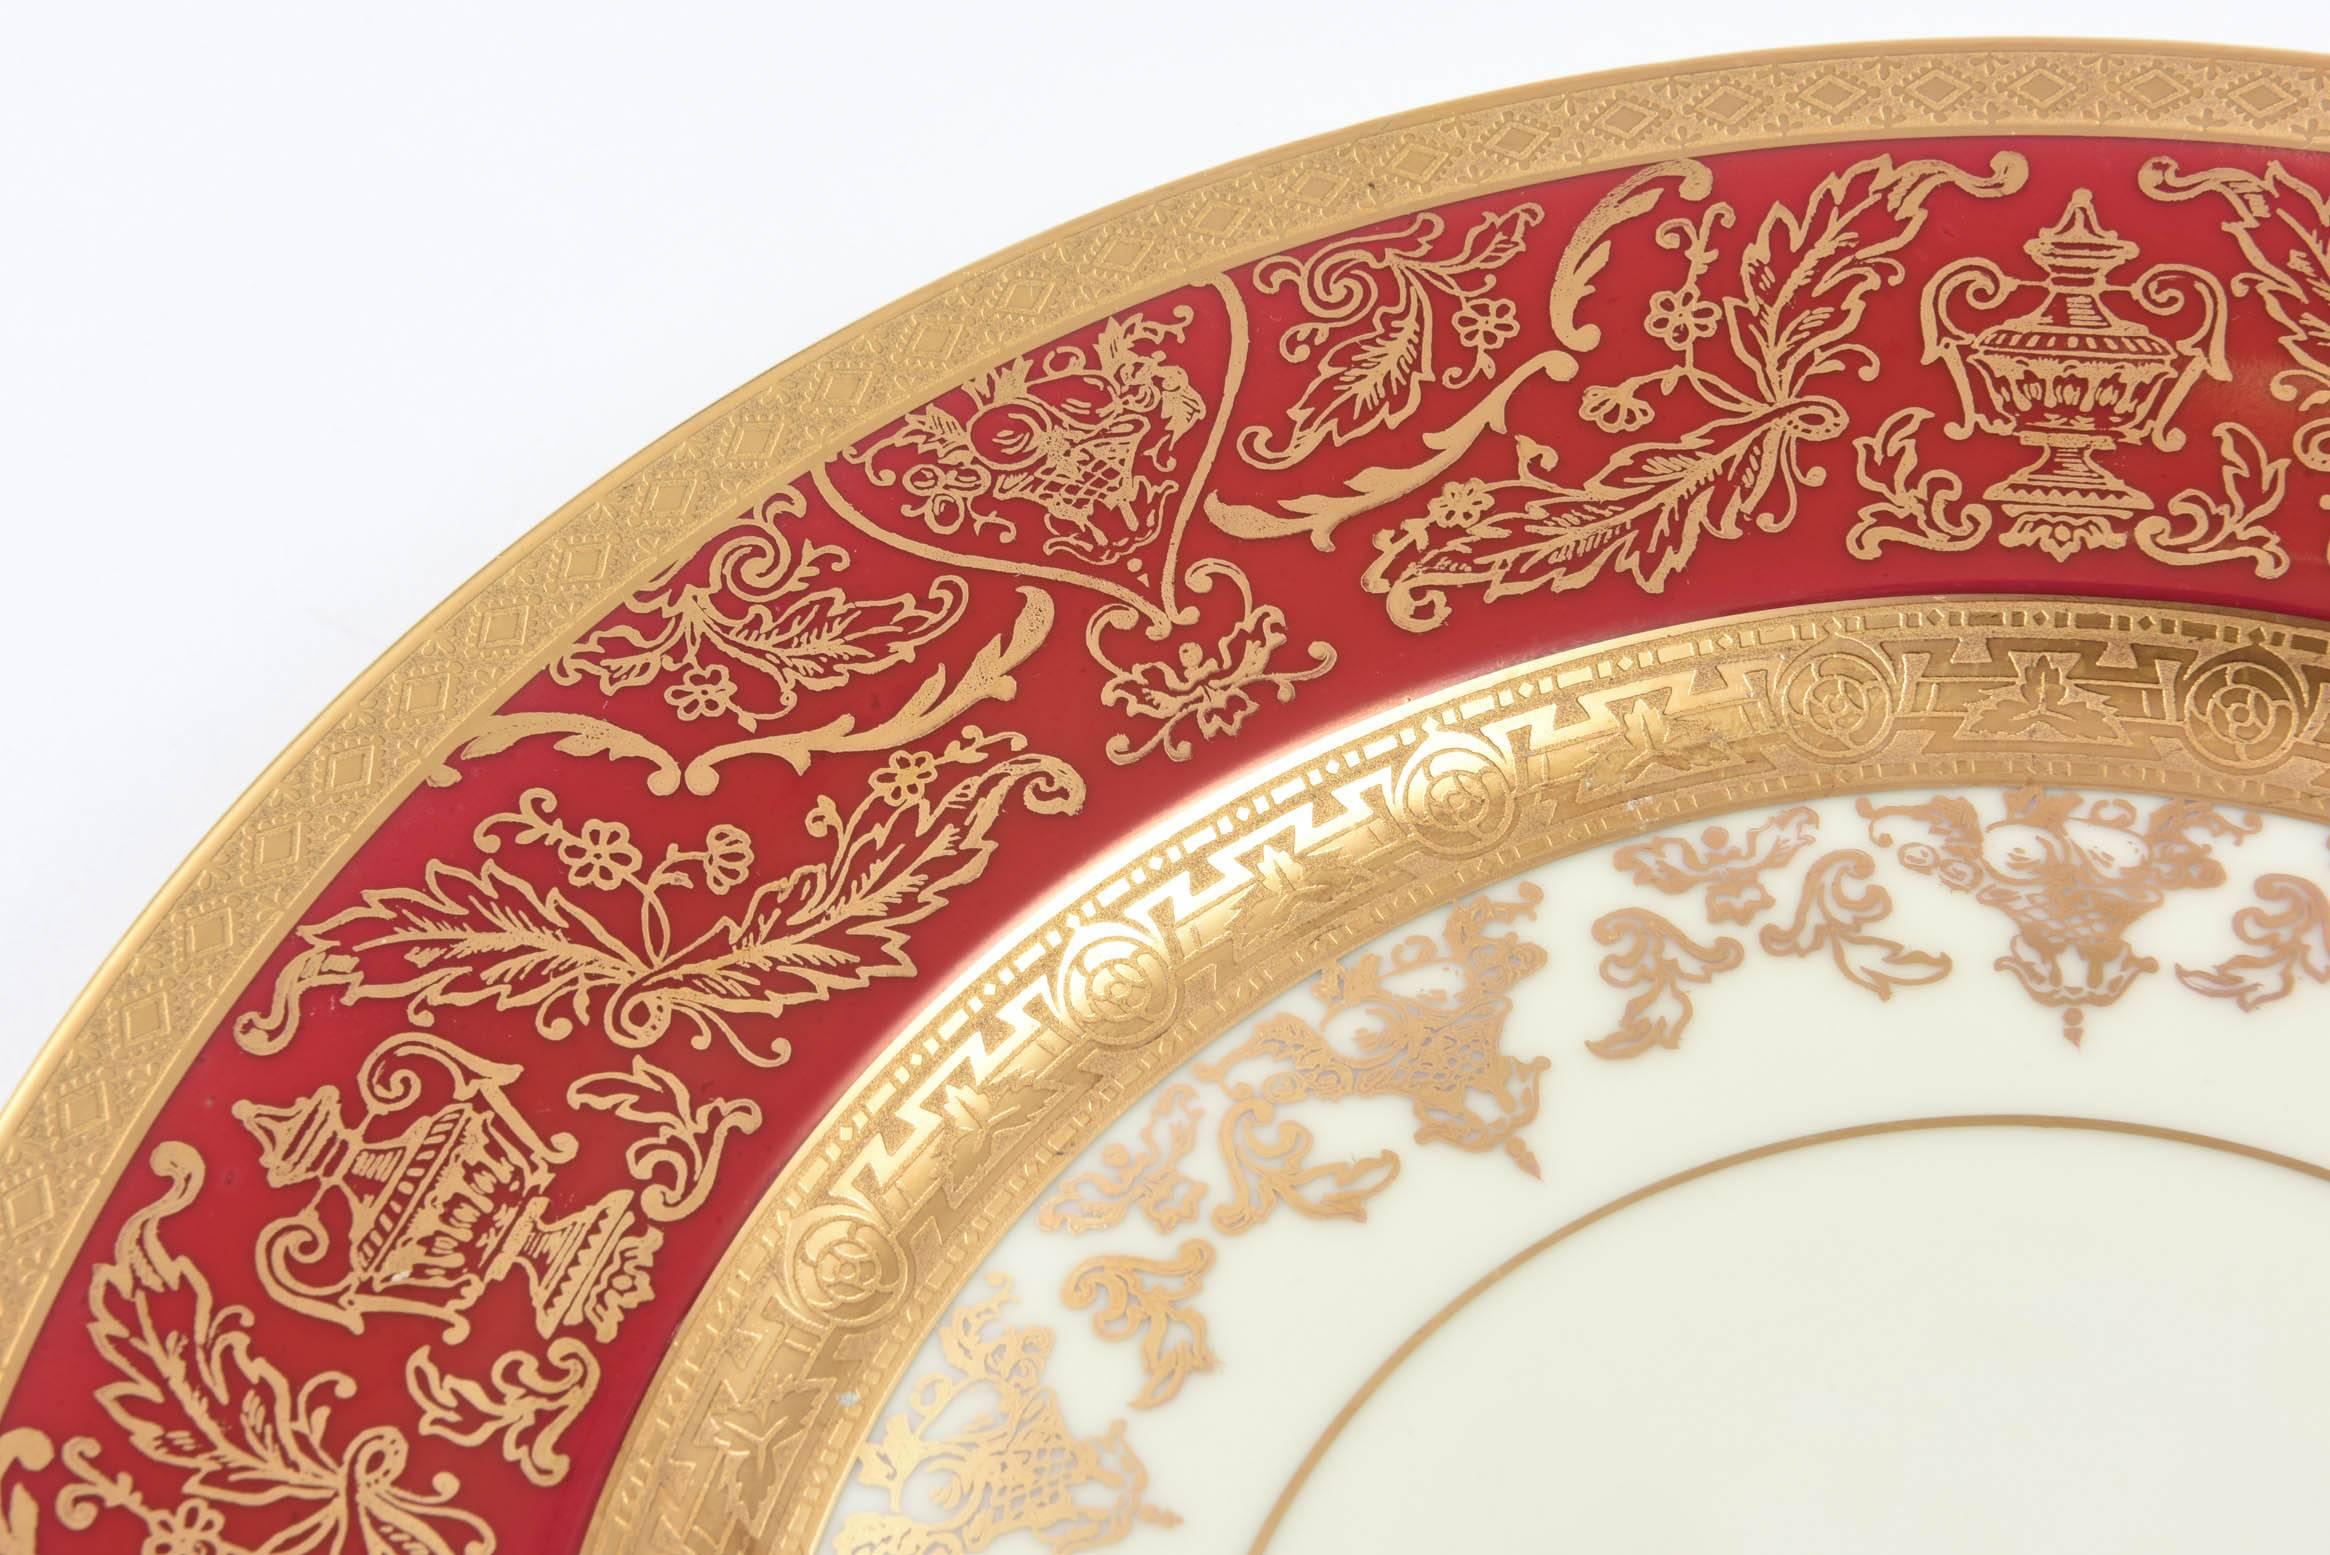 German 12 Impressive Ruby Red & Gold Encrusted Dinner or Presentation Plates, Antique